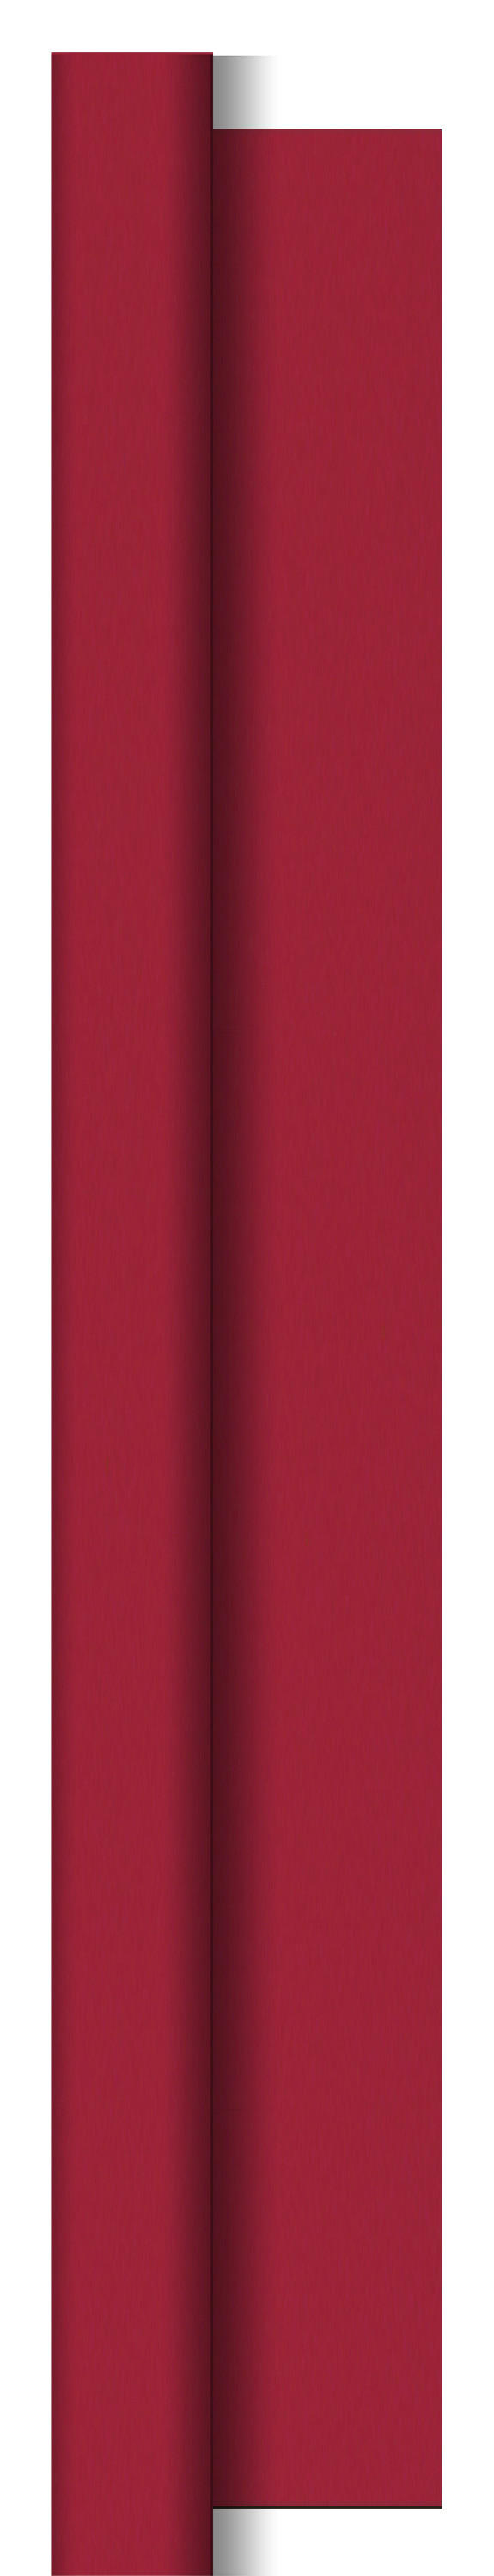 TISCHDECKE   - Bordeaux, Basics, Papier (5/5/119cm)